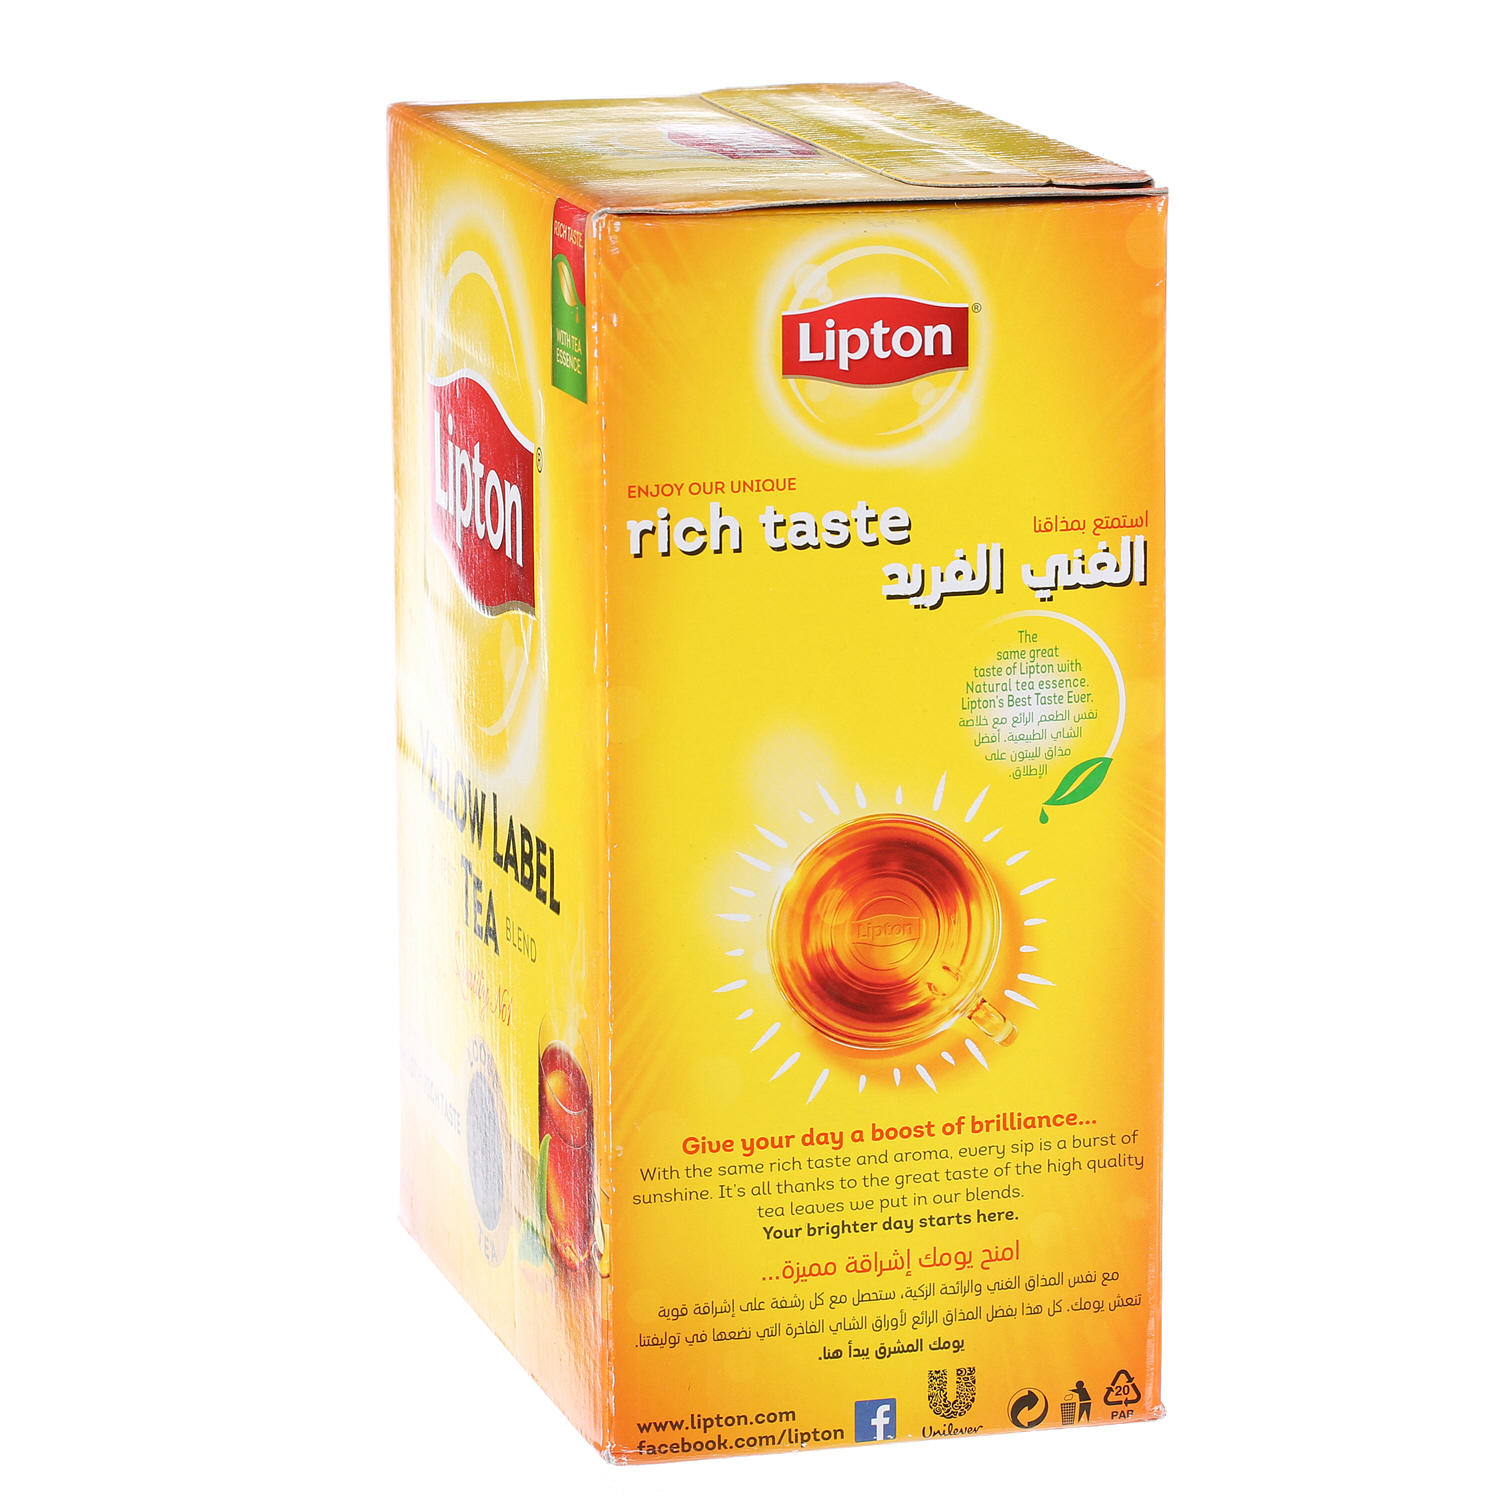 Lipton Yellow Tea Powder 1600gm